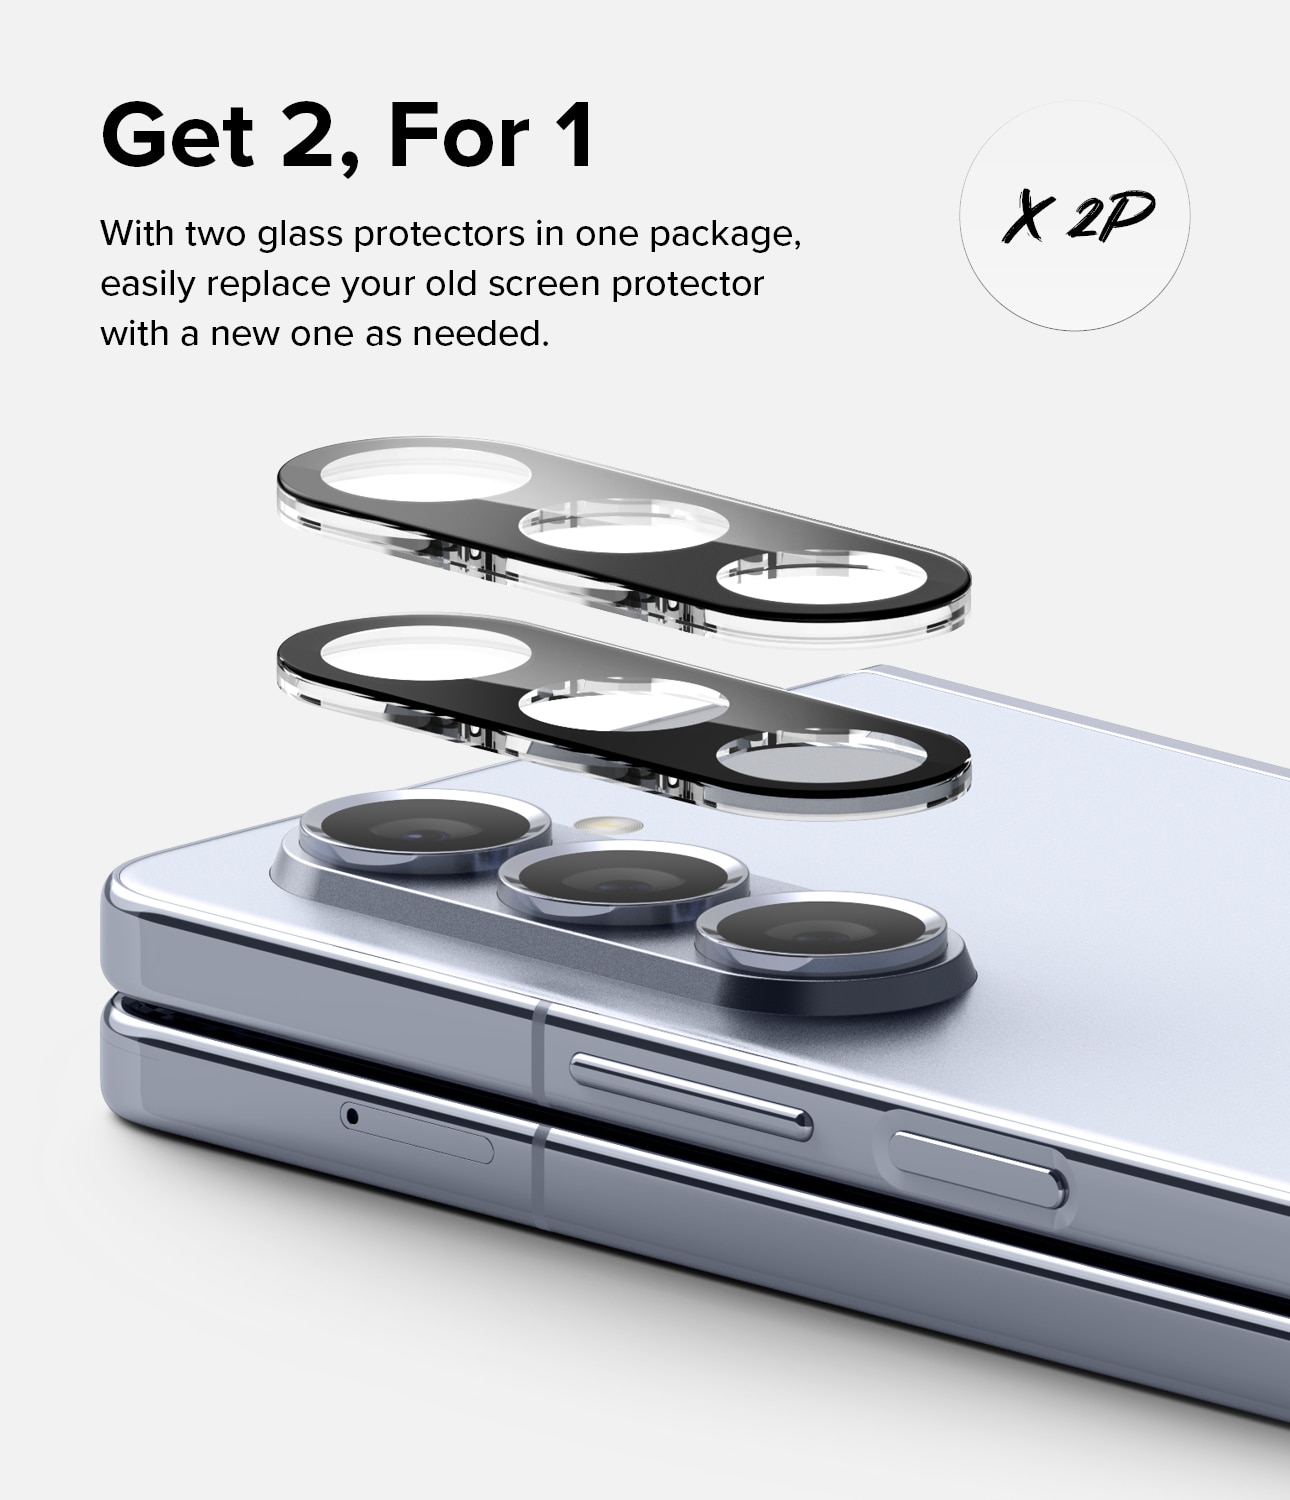 Camera Protector Glass (2 pezzi) Samsung Galaxy Z Fold 5 Trasparente